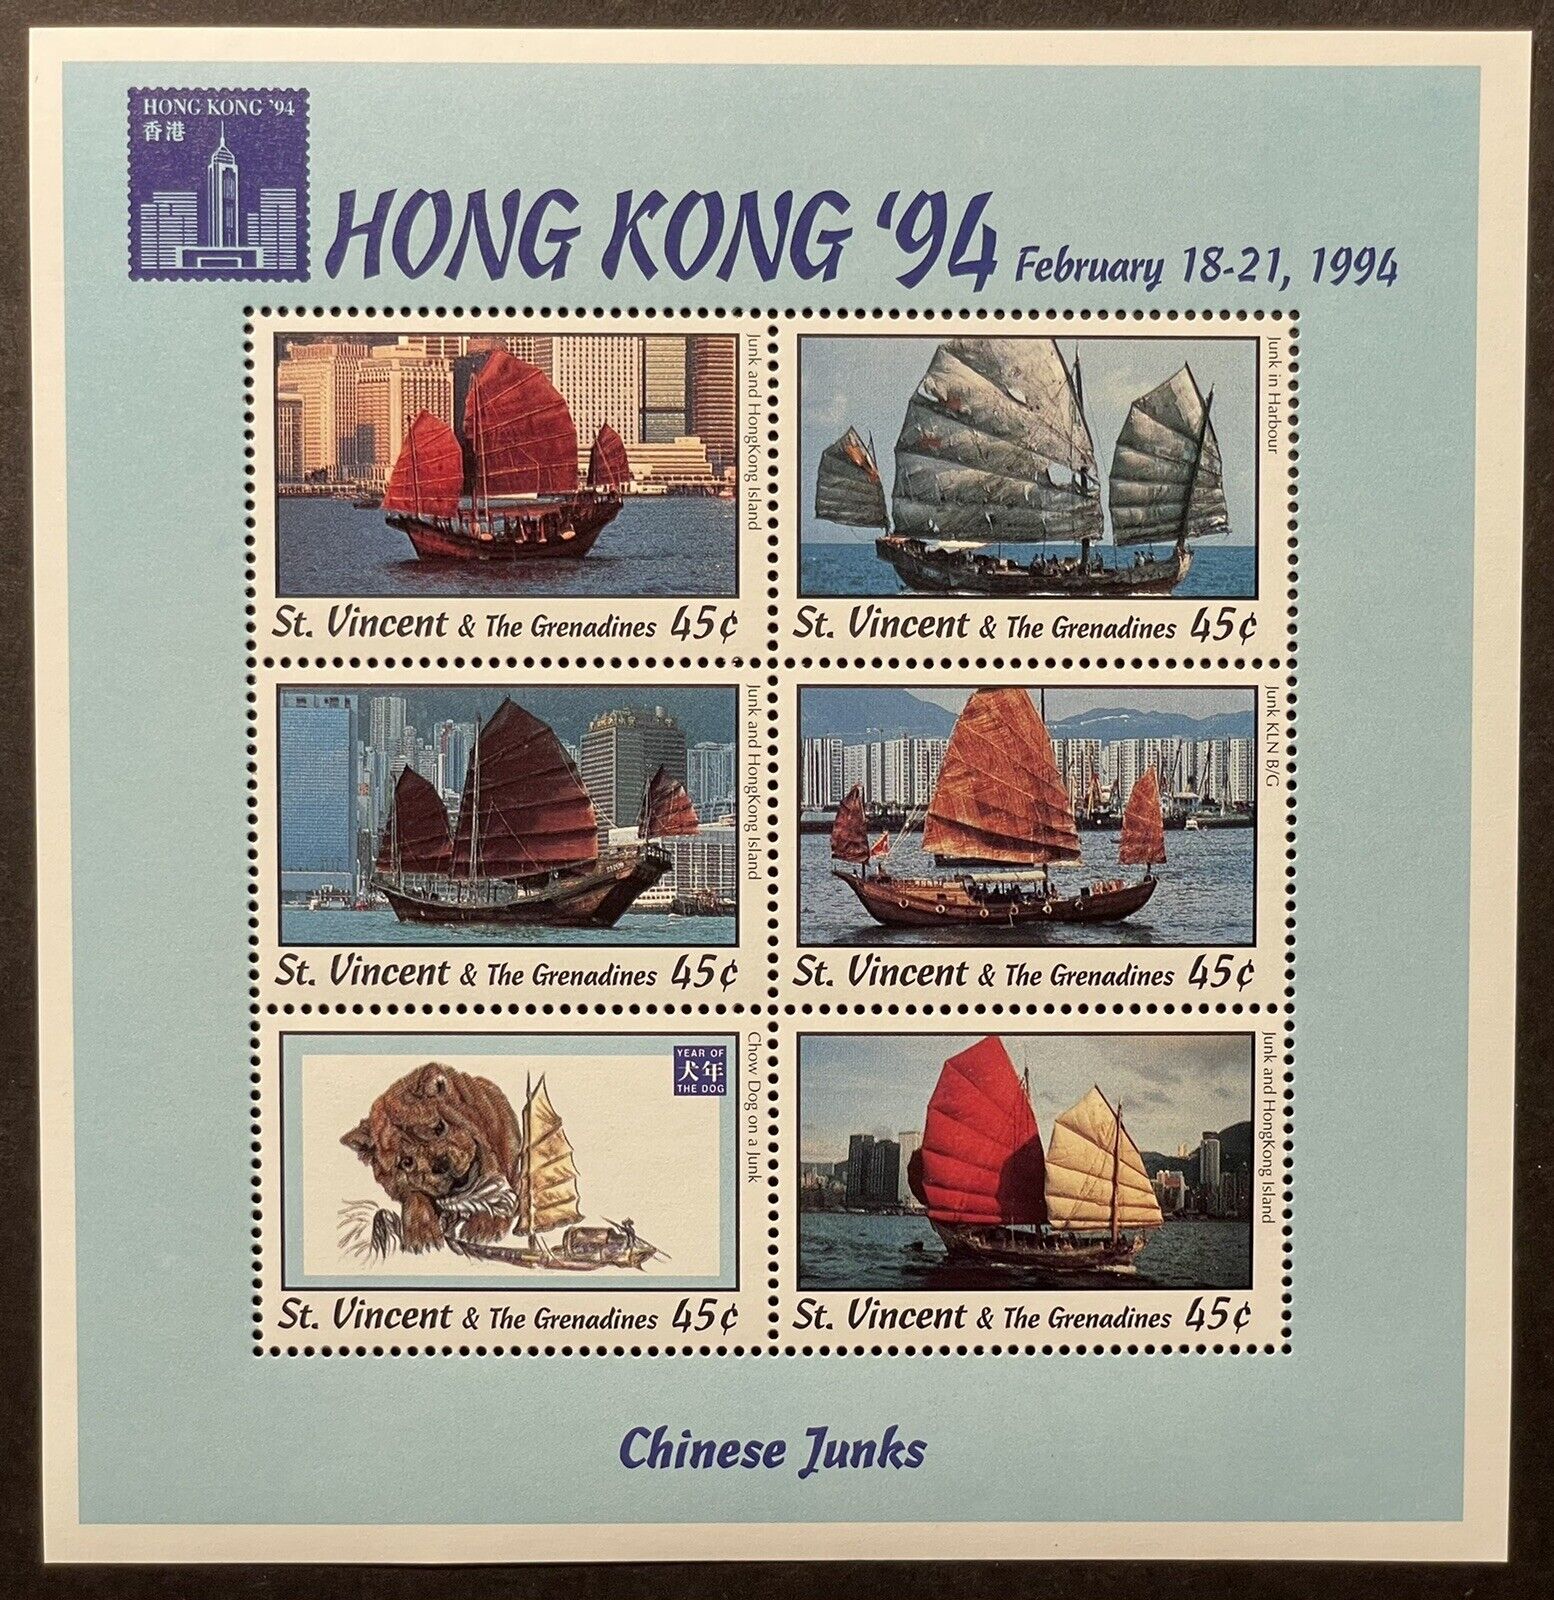 ST VINCENT CHINESE JUNKS STAMPS SHEET 6V HONG KONG 94 SHIP MNH YEAR OF THE DOG